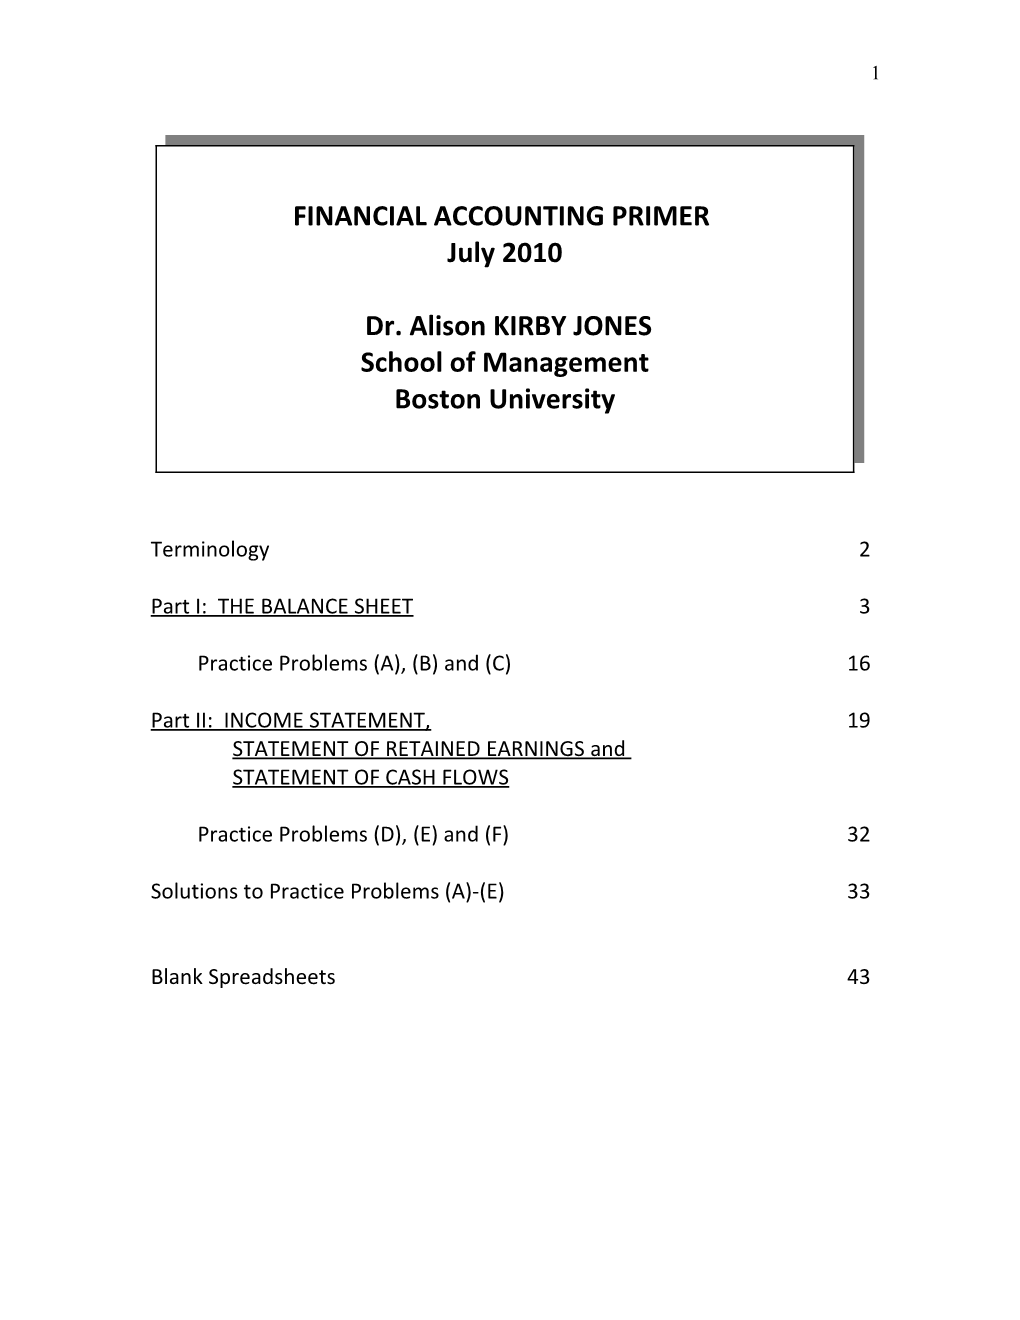 July 2010, Alison Kirby Jonesfinancial Accounting Primer, Page 1